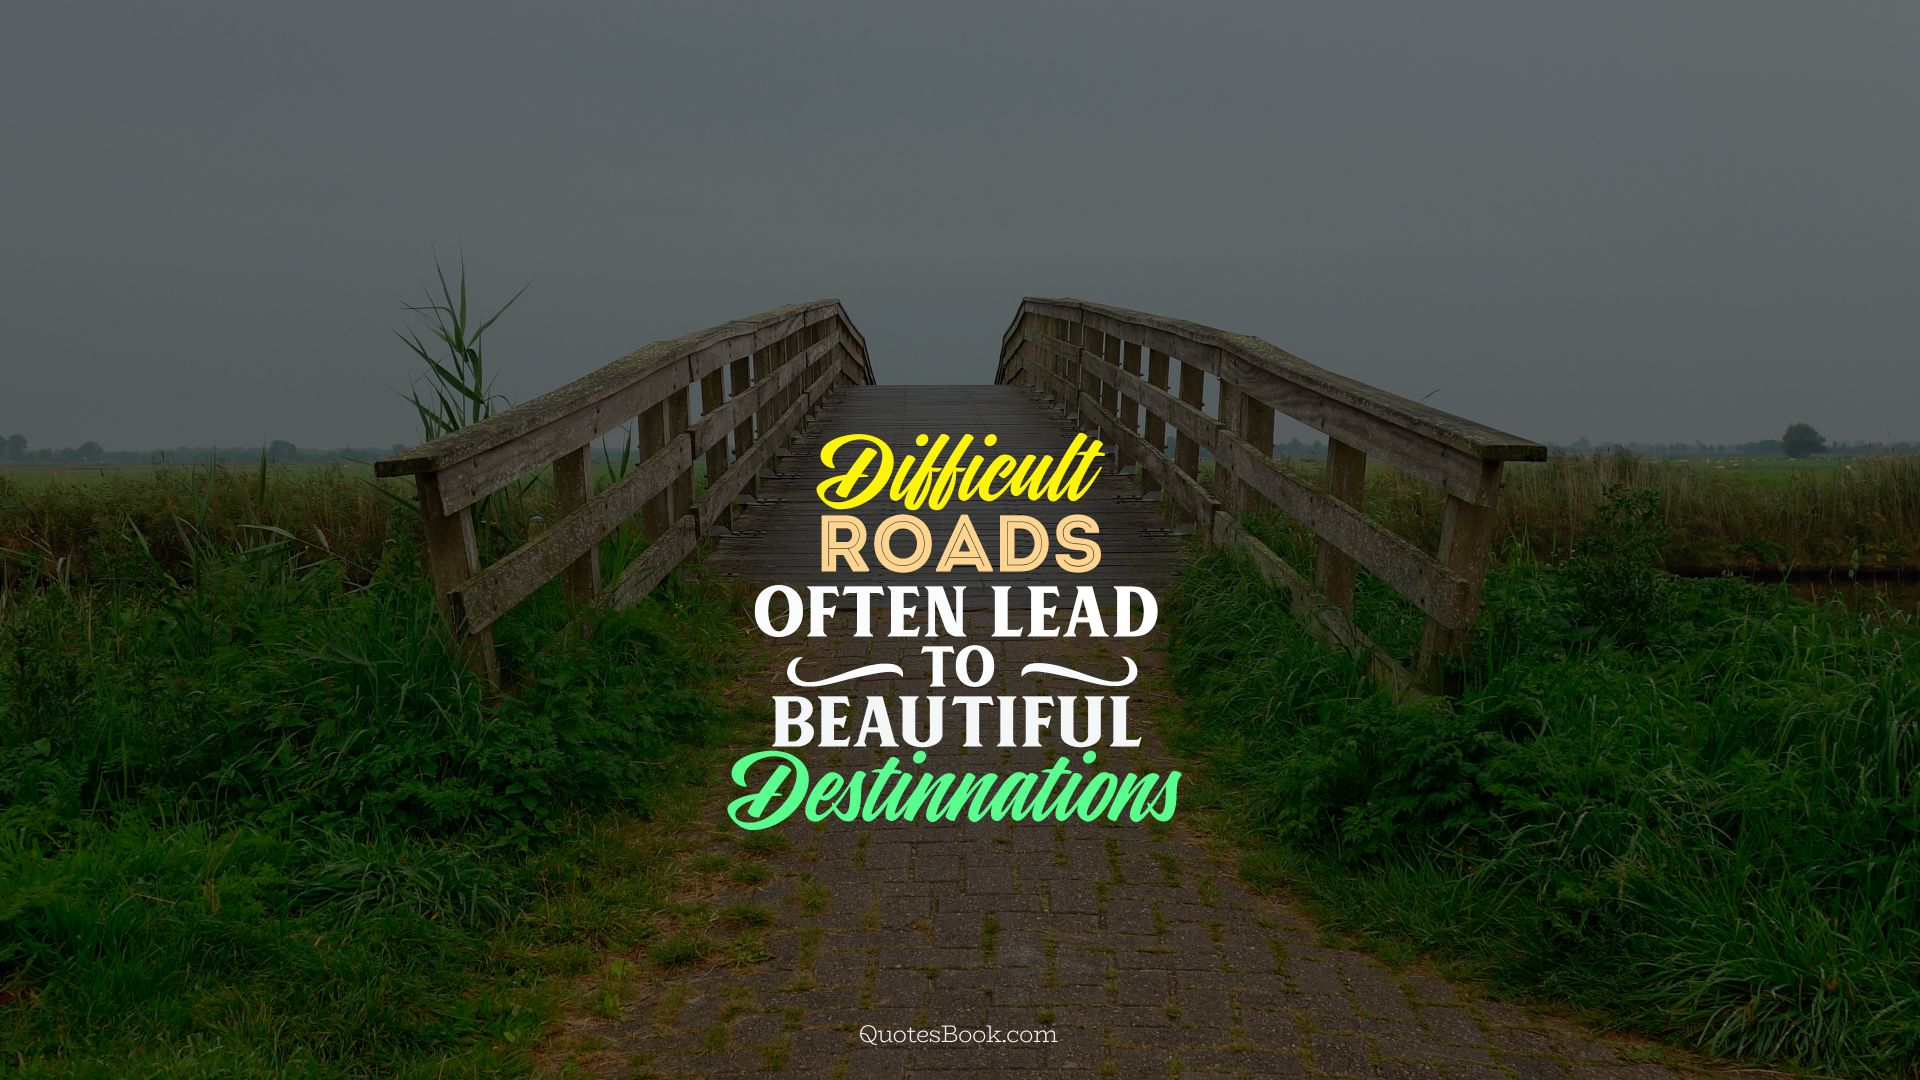 Difficult roads often lead to beautiful destinnations